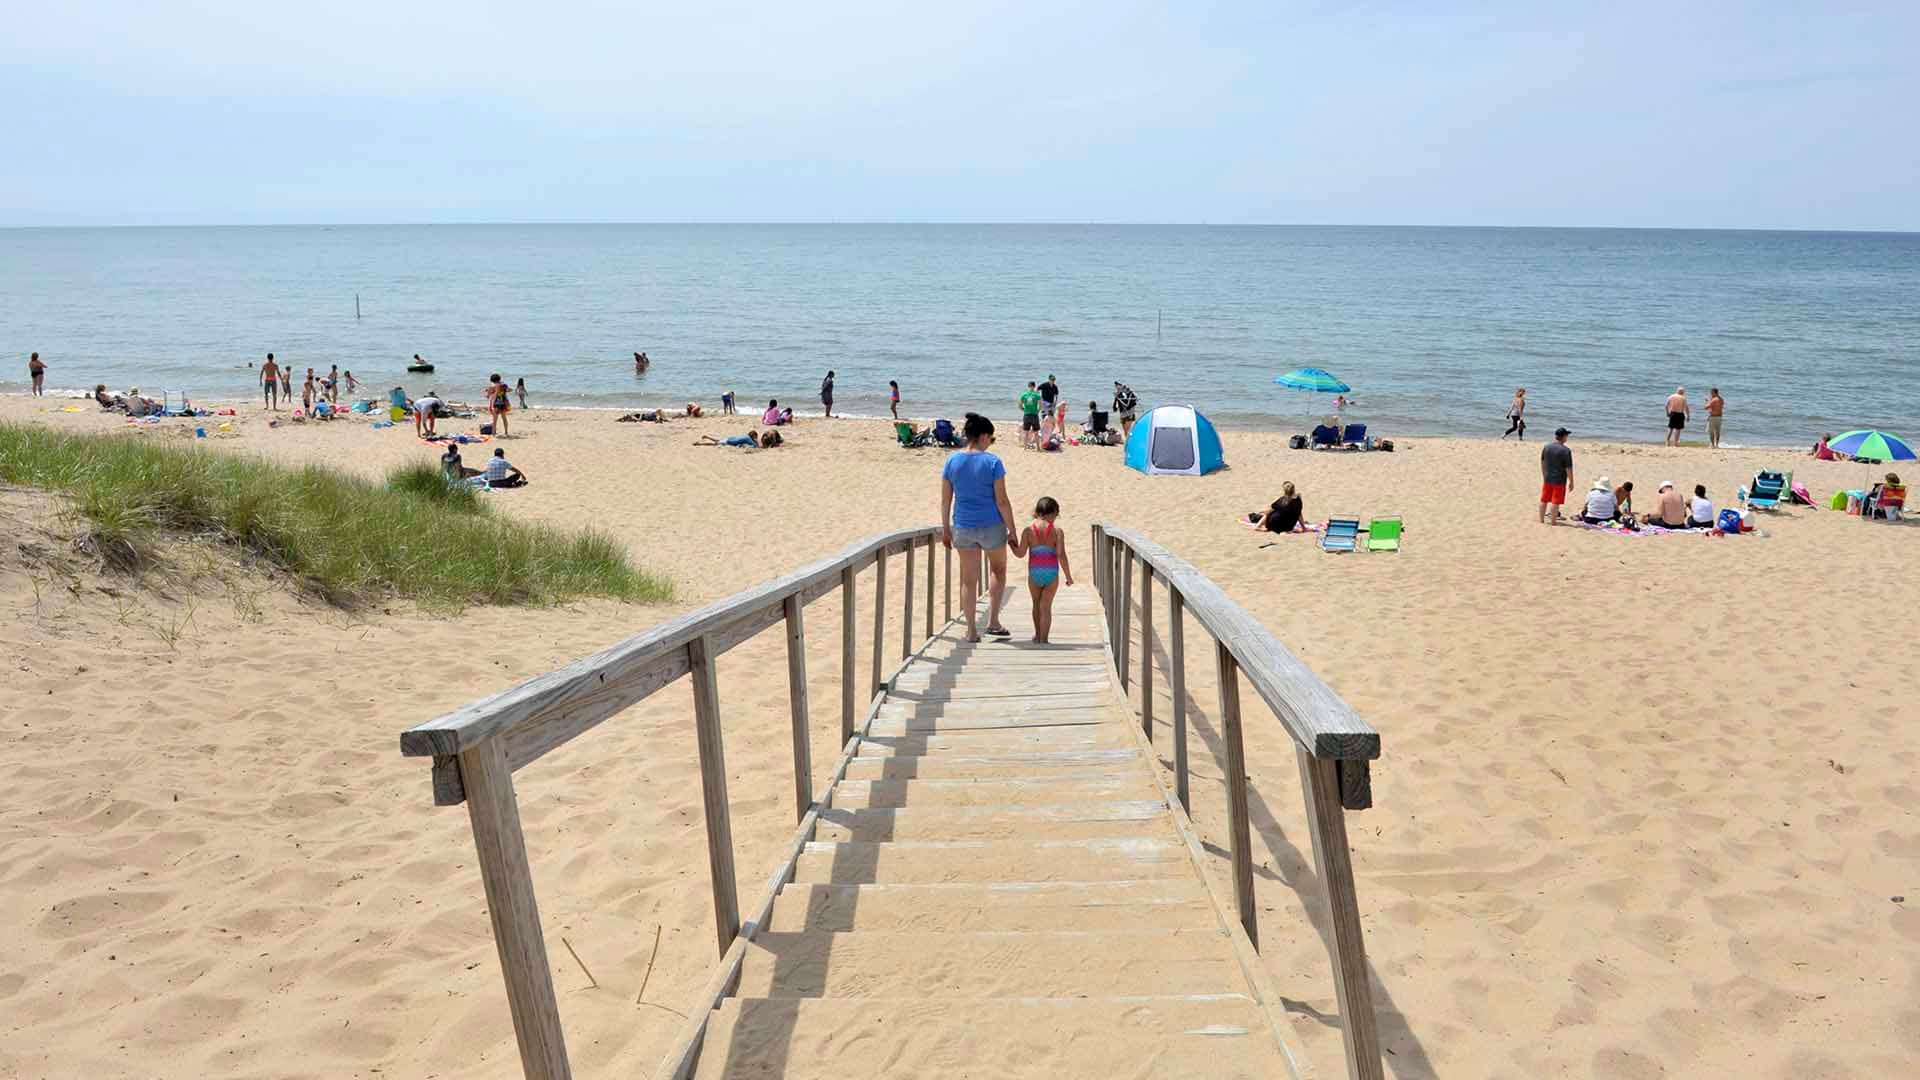 Oval Beach in Saugatuck, Michigan draws crowds, especially in summer.